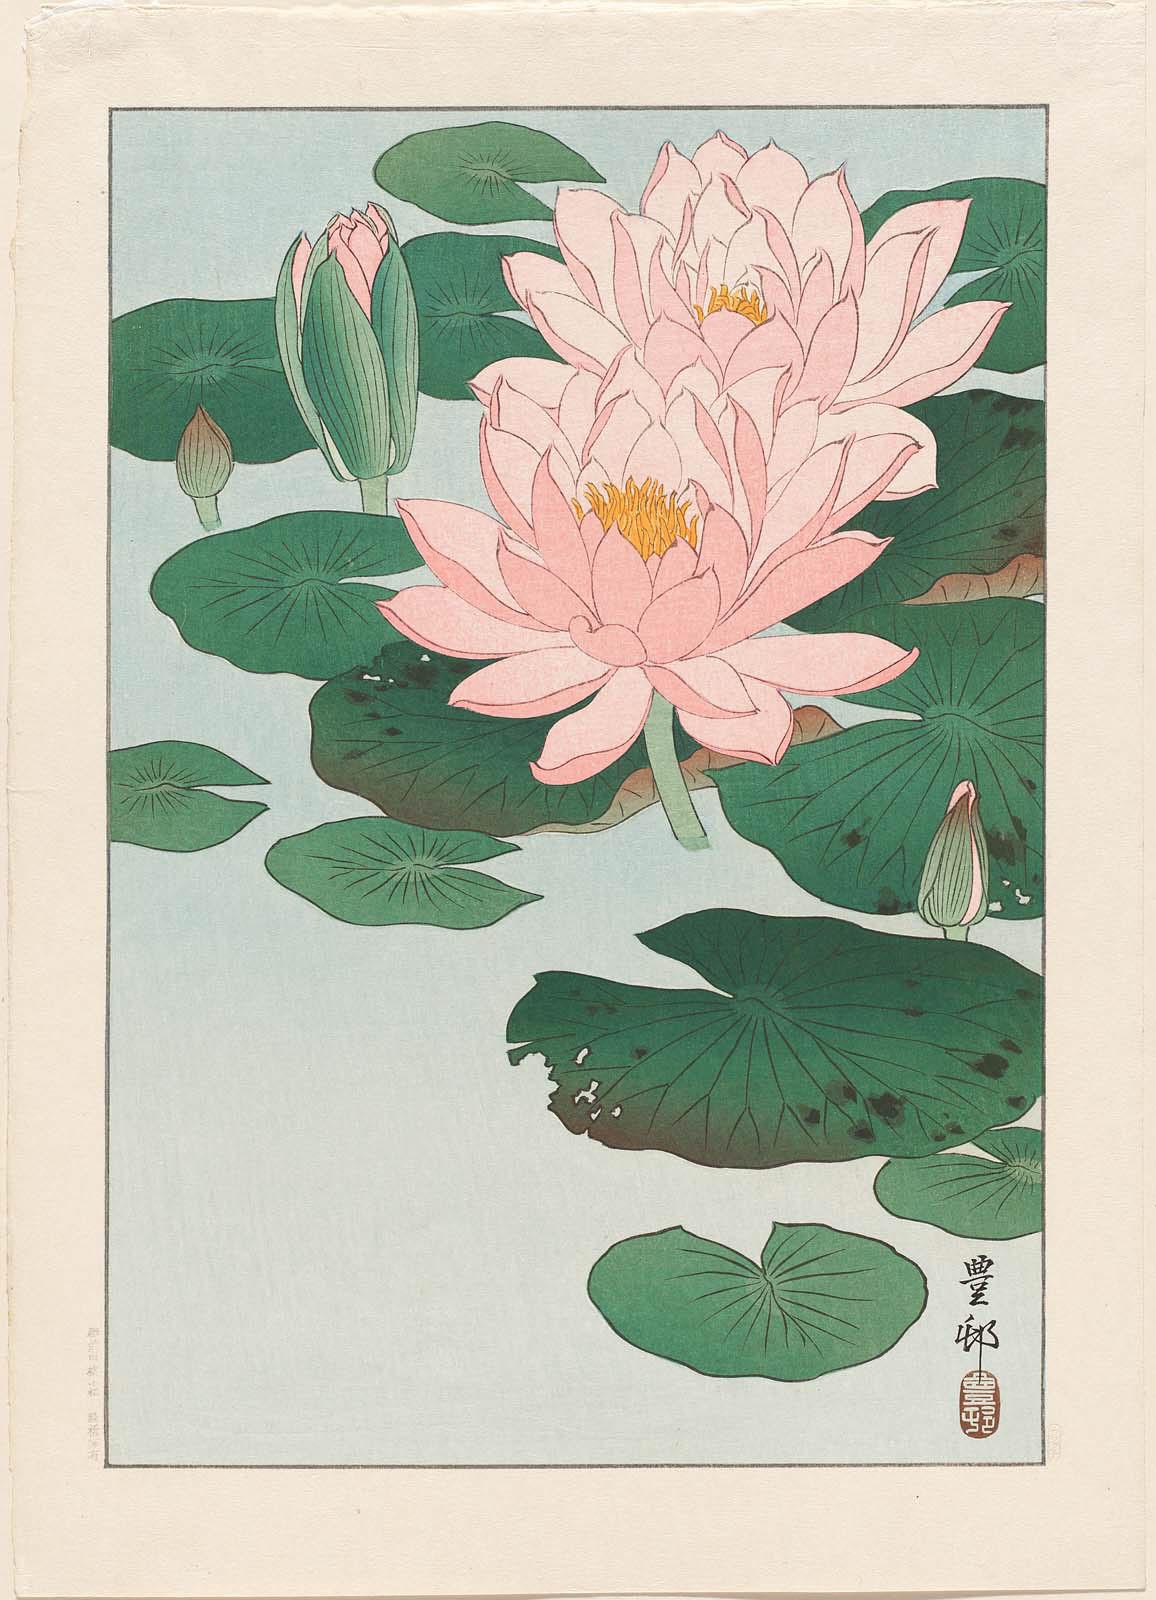 睡蓮 by Ohara Koson - 1920年代 - 37.6 x 26.9 cm 